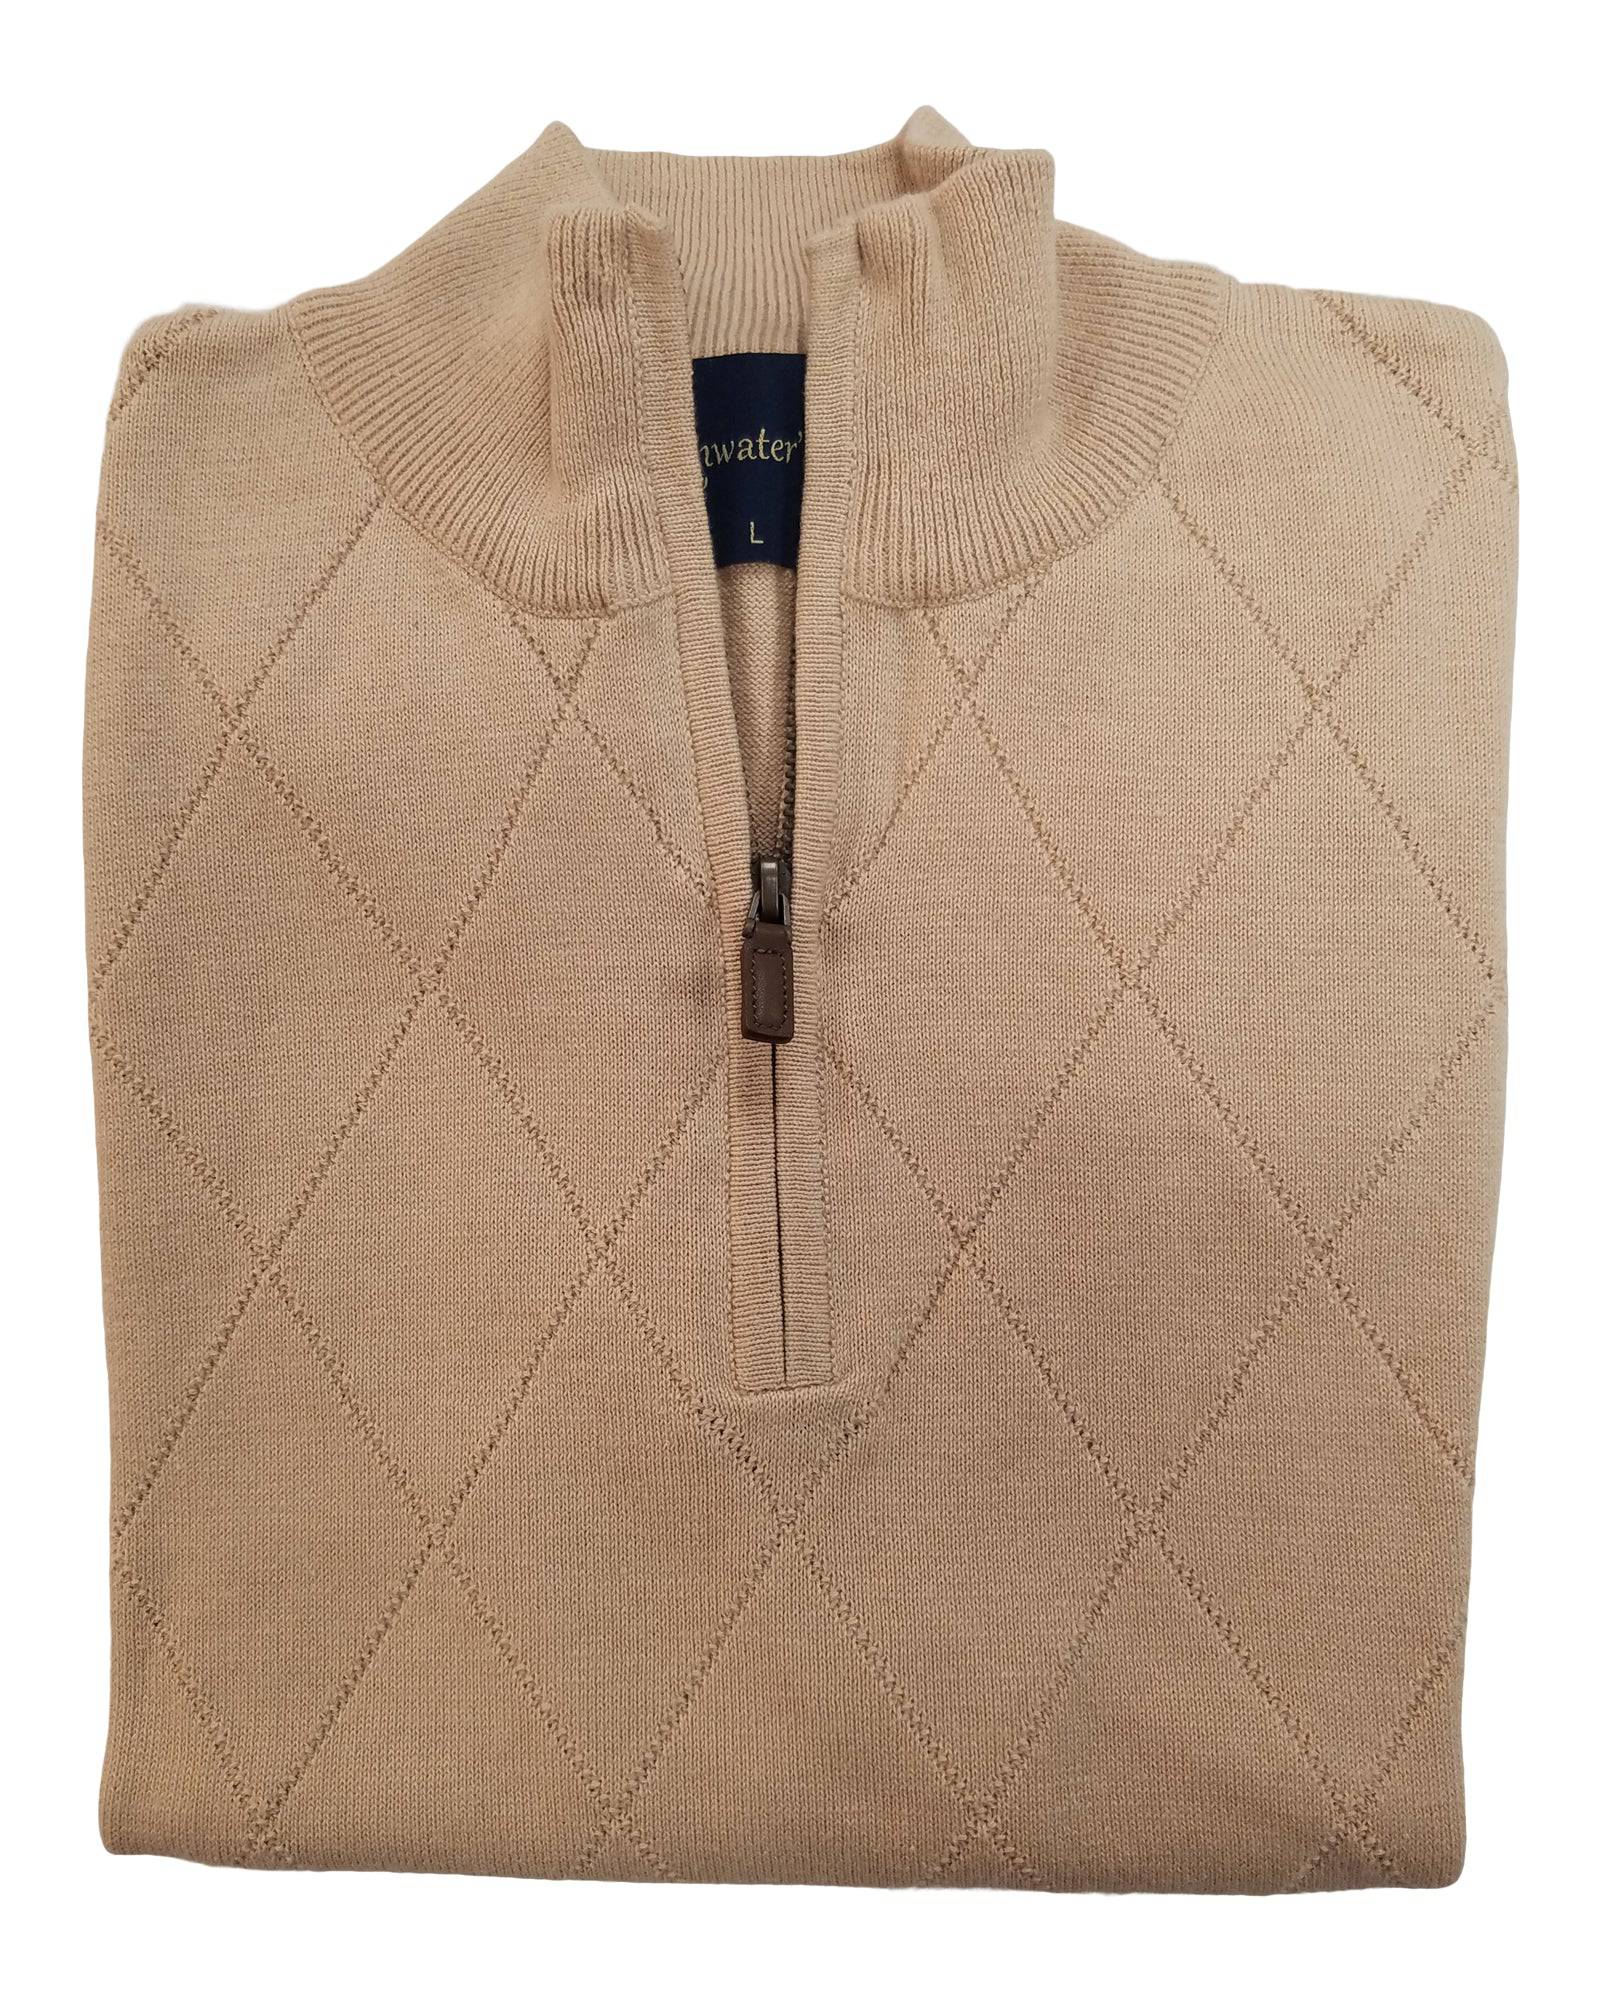 1/4 Zip Mock Sweater Vest in Beige Diamond Weave Cotton Blend - Rainwater's Men's Clothing and Tuxedo Rental